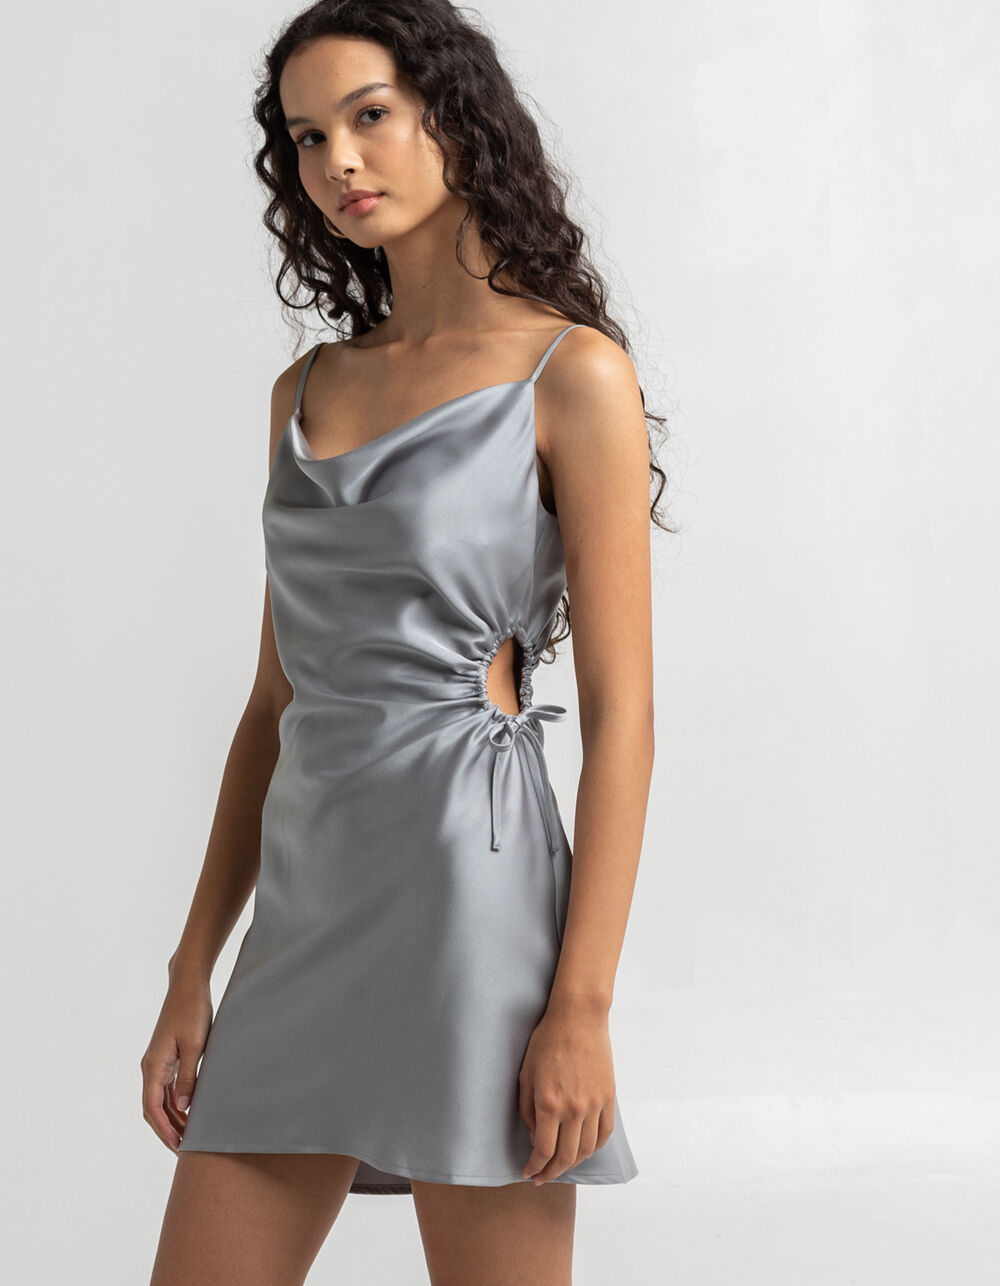 WEST OF MELROSE Satin Cutout Dress - GRAY | Tillys